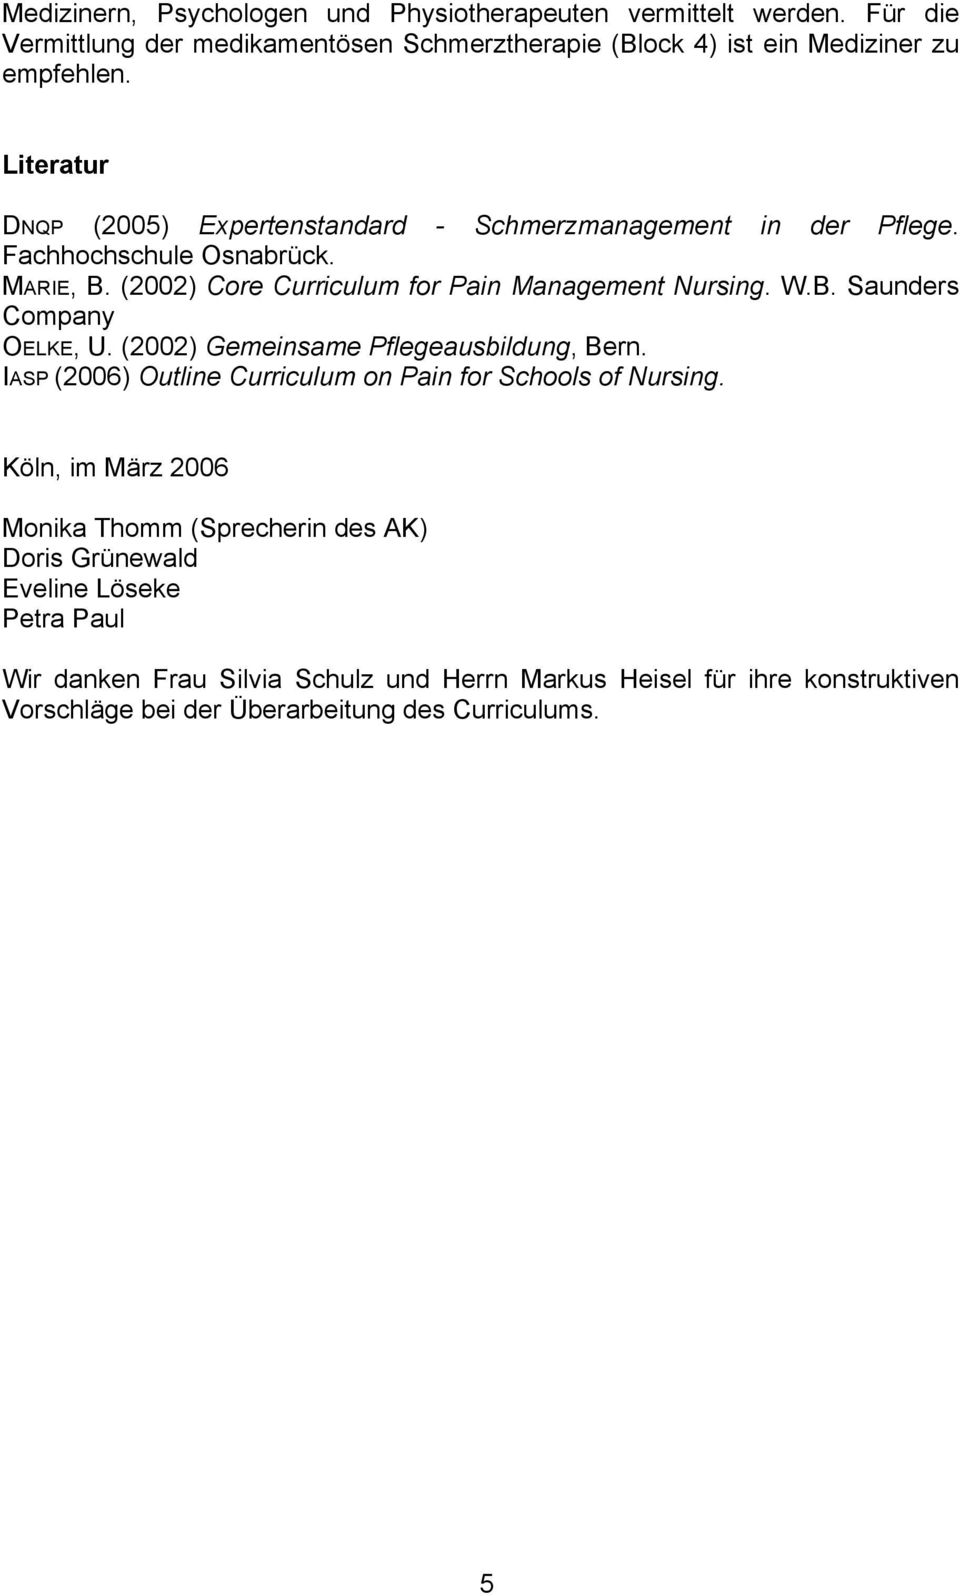 (2002) Gemeinsame Pflegeausbildung, Bern. IASP (2006) Outline Curriculum on Pain for Schools of Nursing.